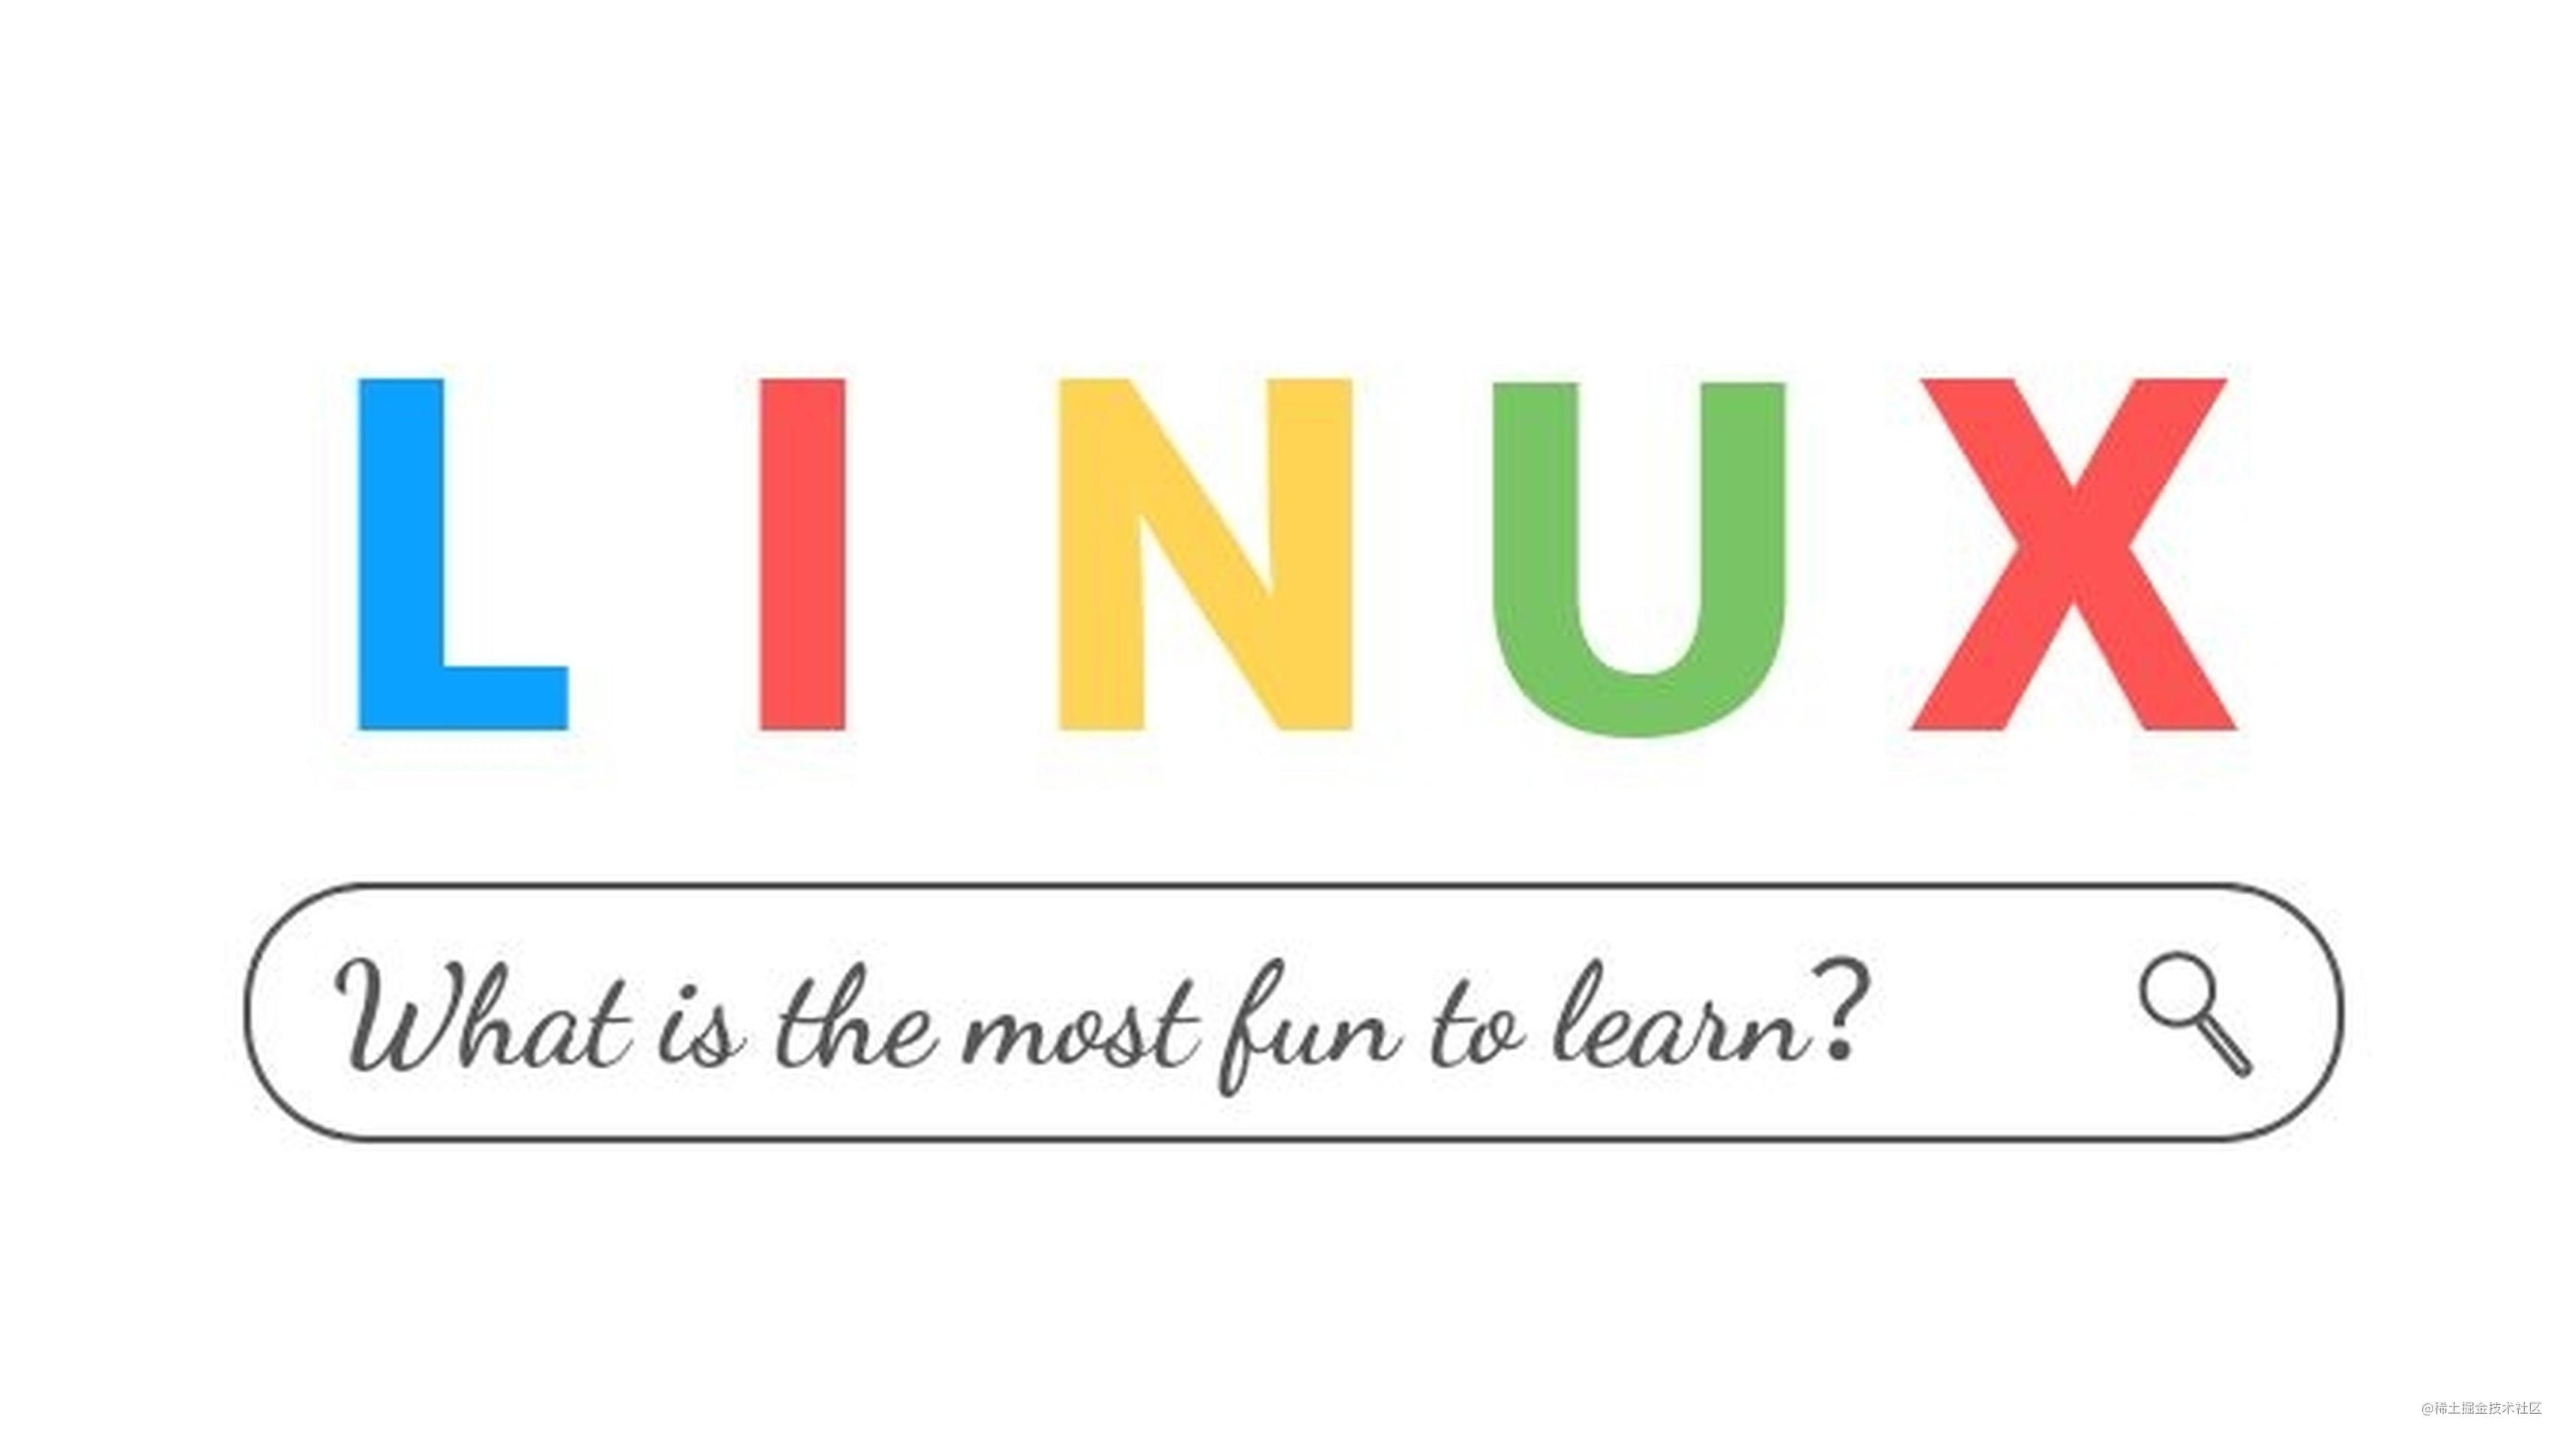 Linux常用命令手册